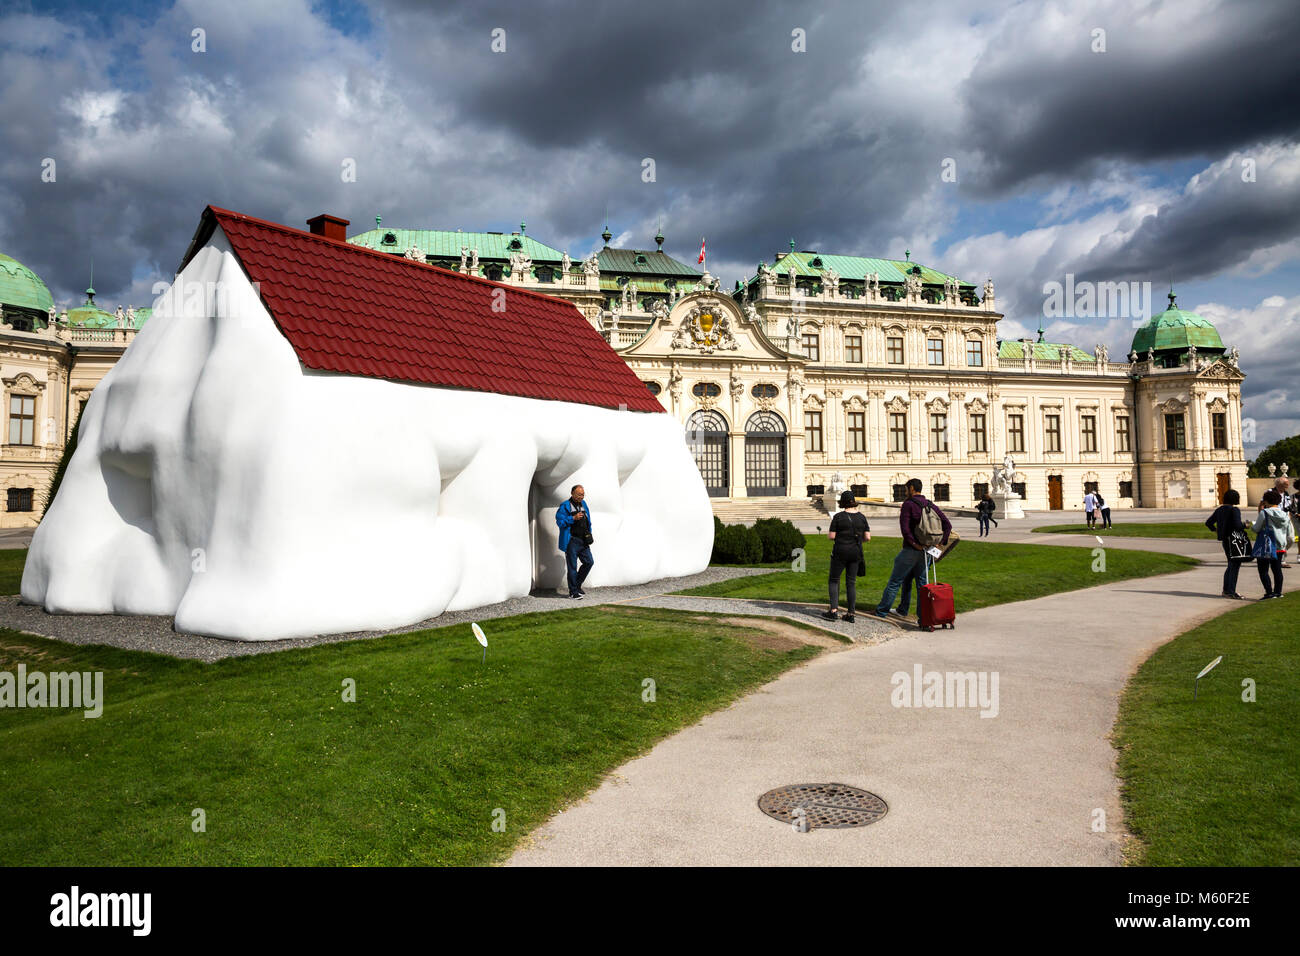 Erwin Wurm's Fat House sculpture on display at Belvedere Palace, Wien, Vienna, Austria. Stock Photo